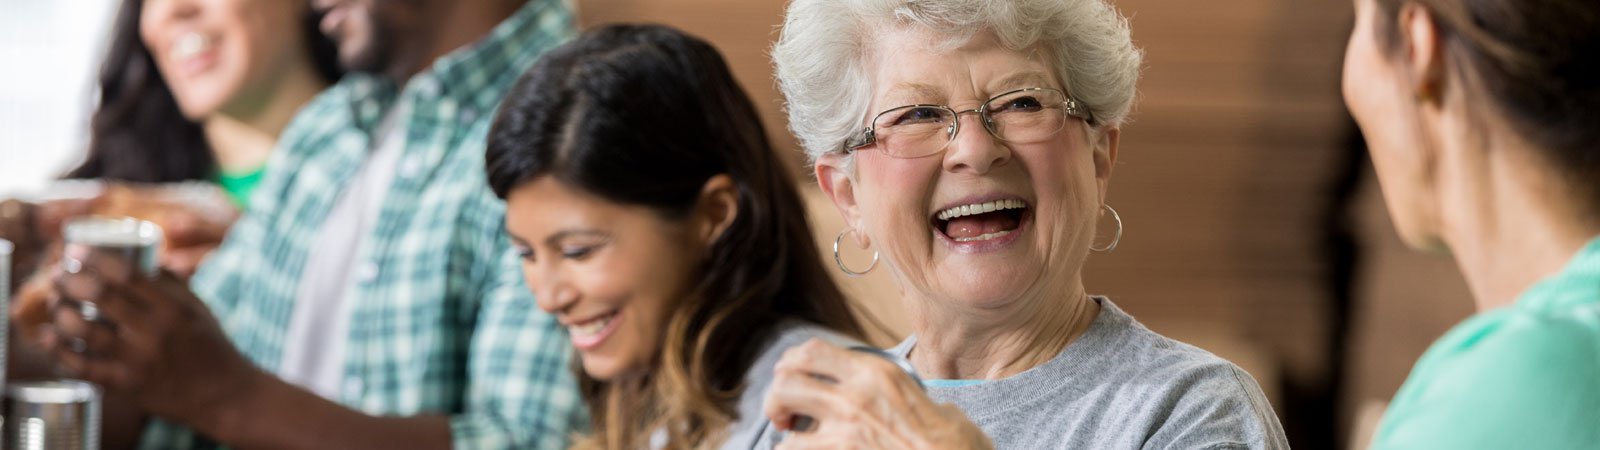 Older woman laughing